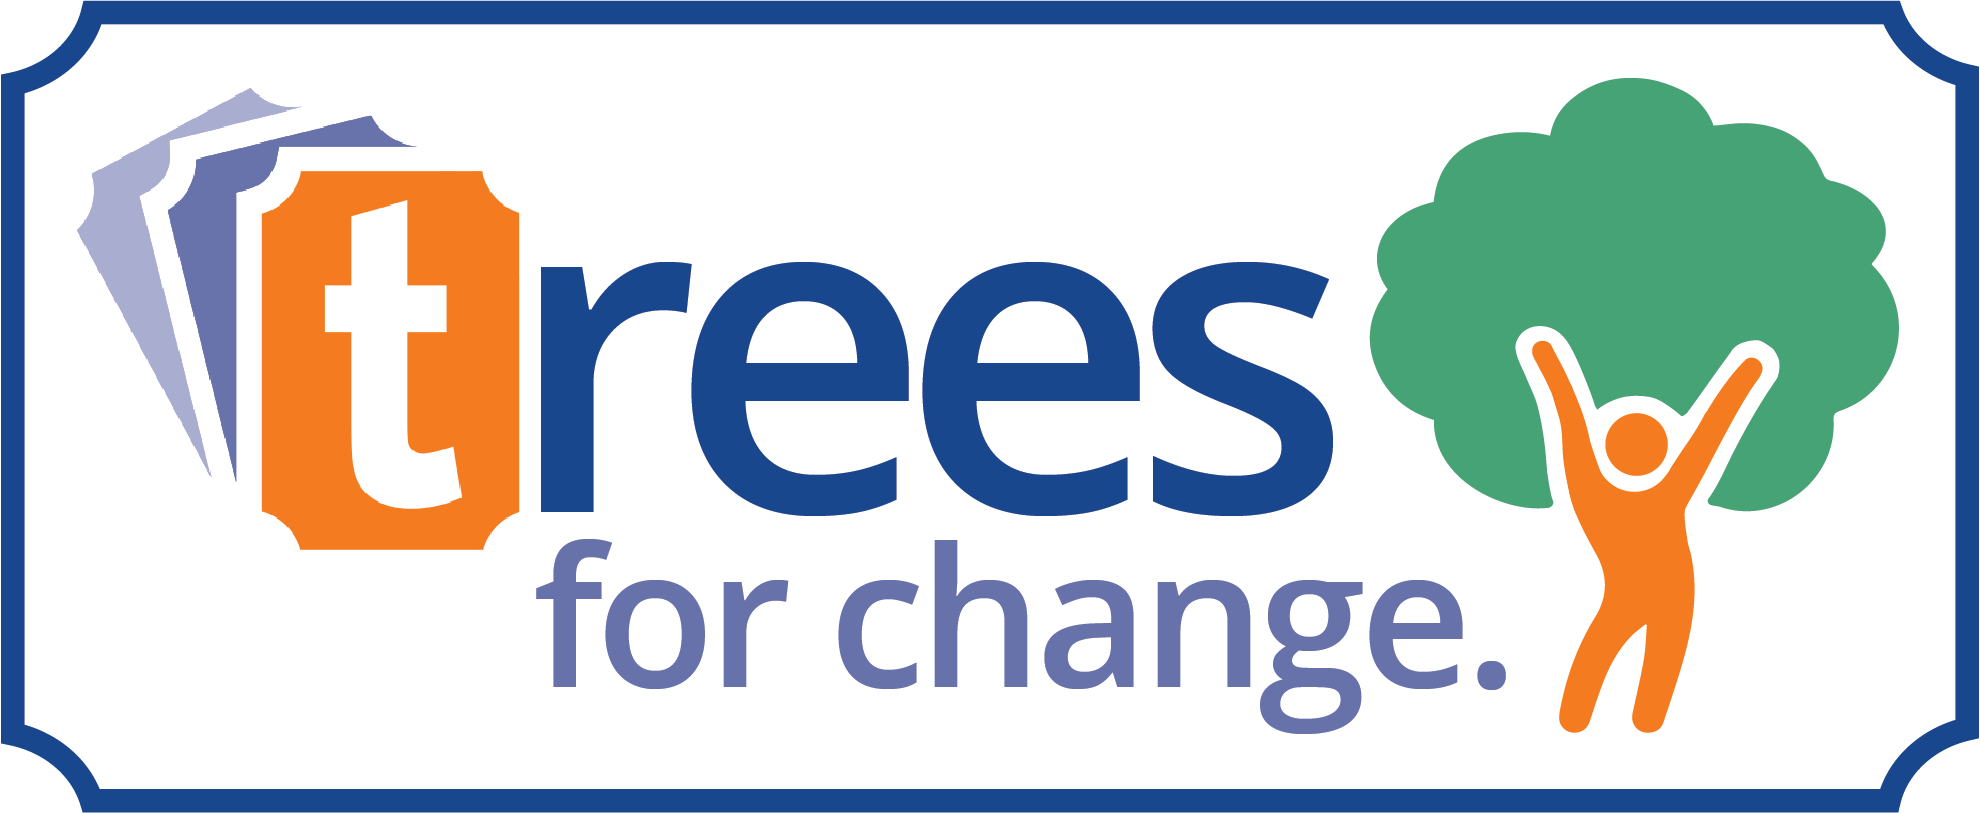 Ticketebo's Trees or Change Program logo